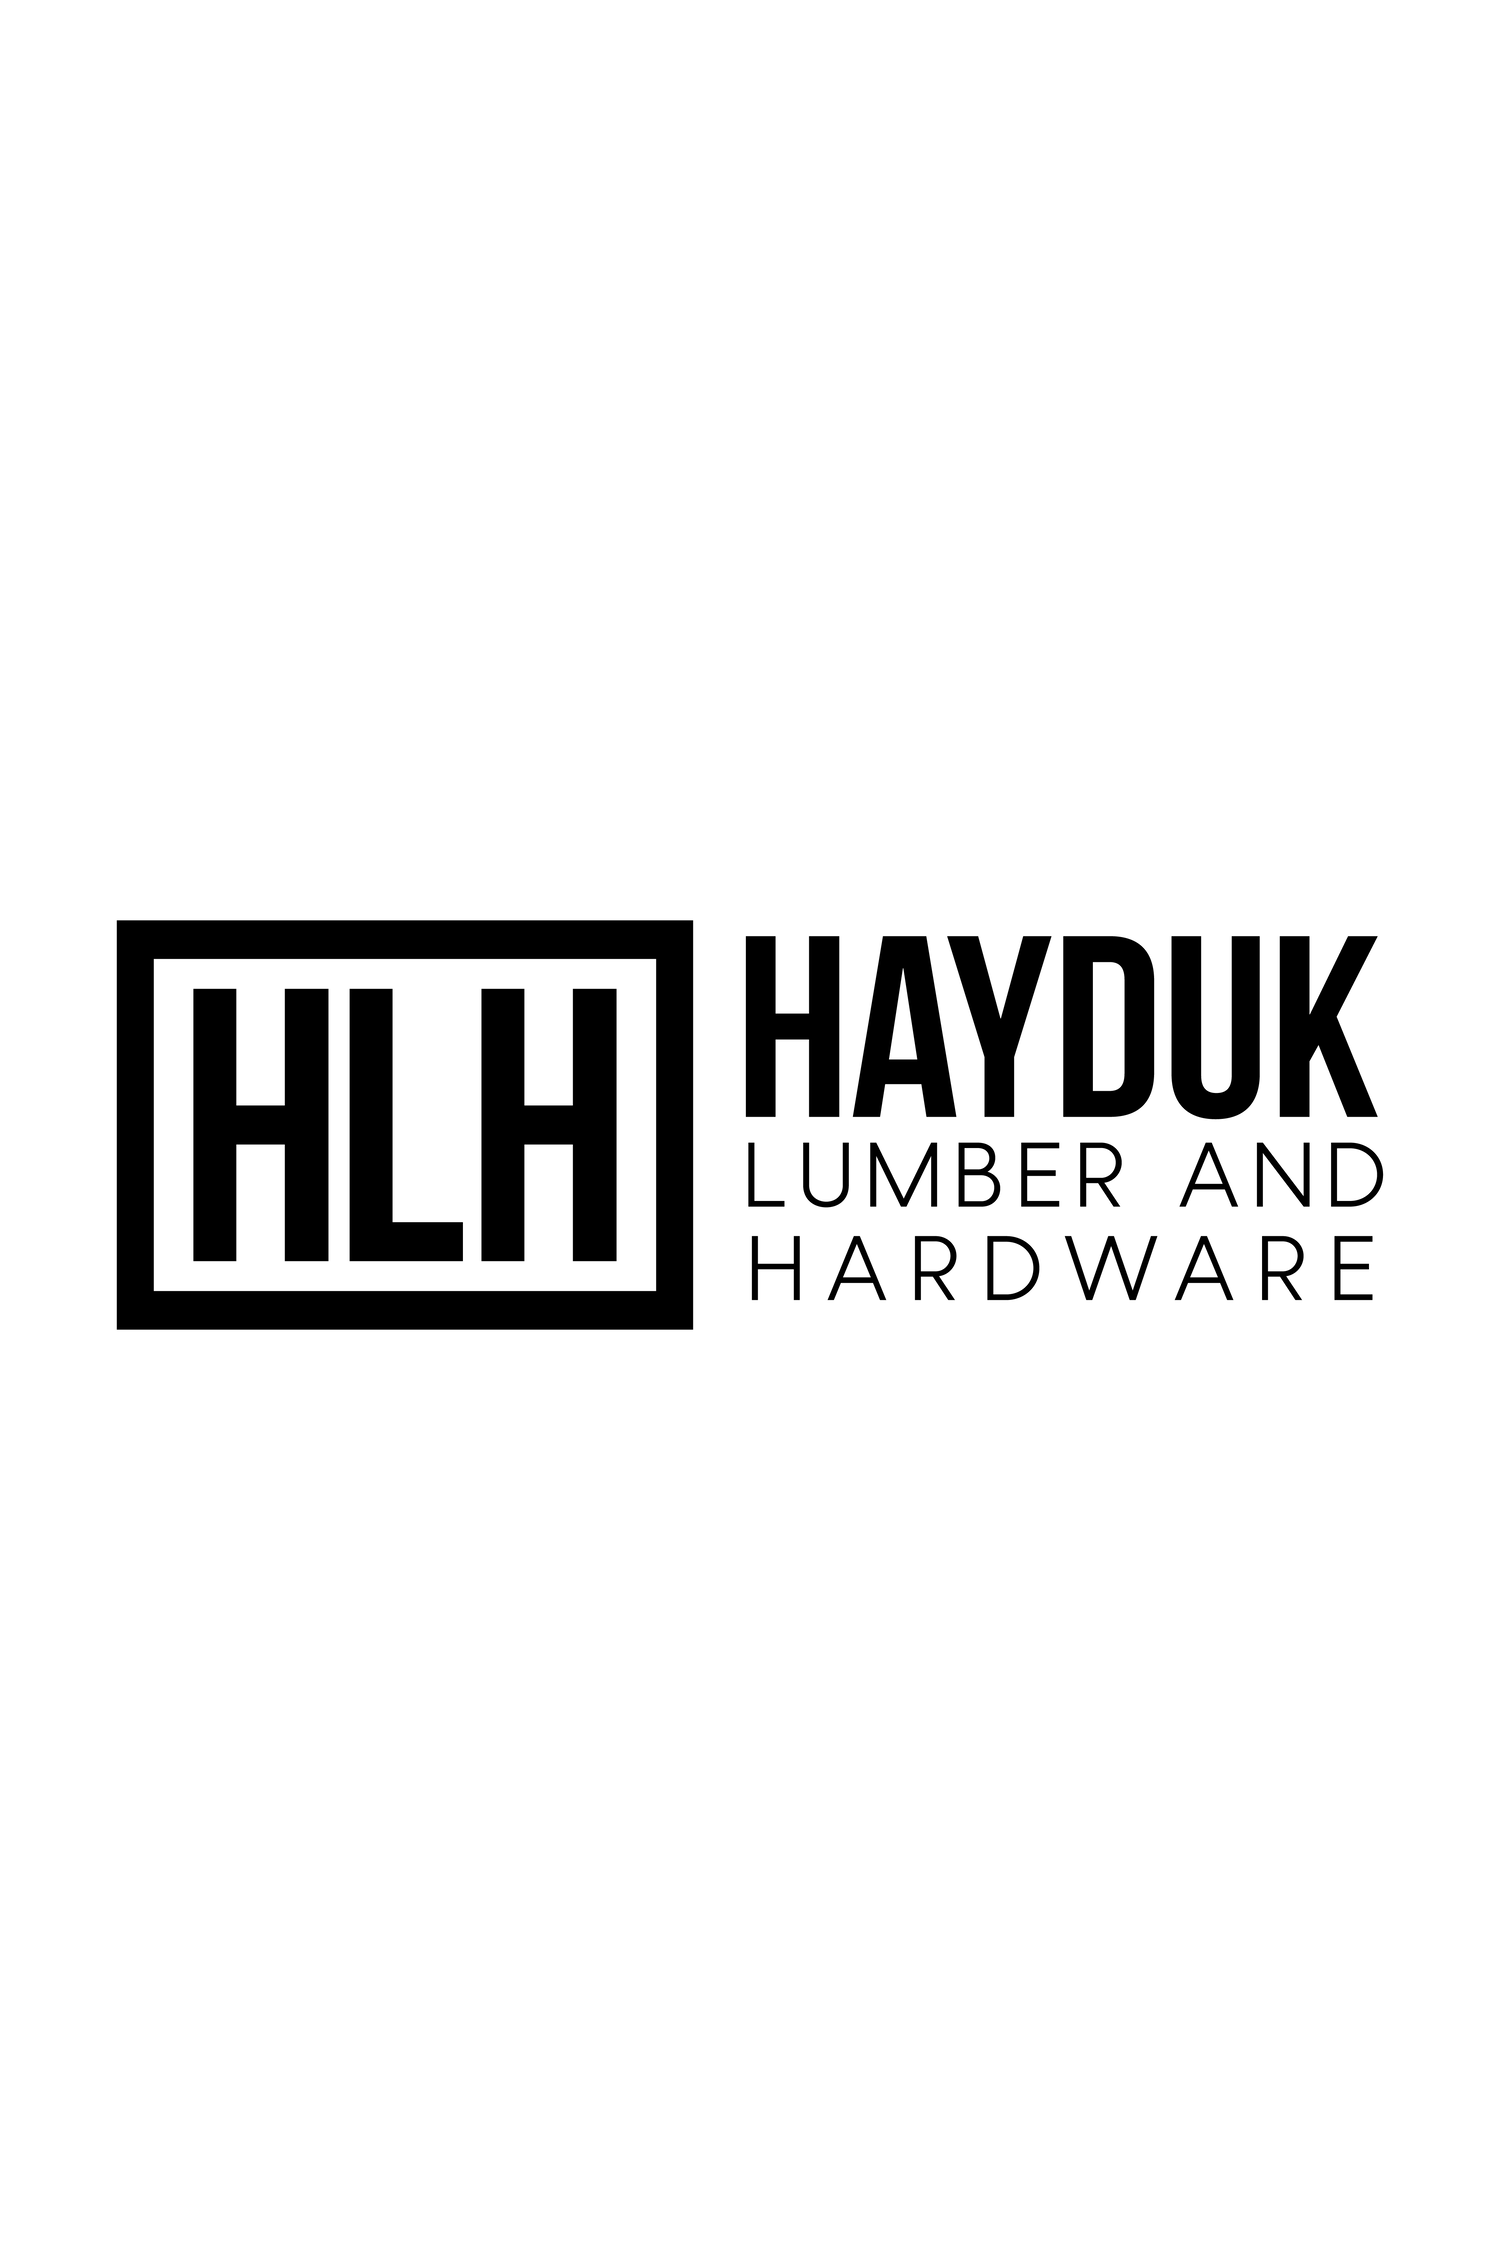 www.hayduklumberandhardware.com